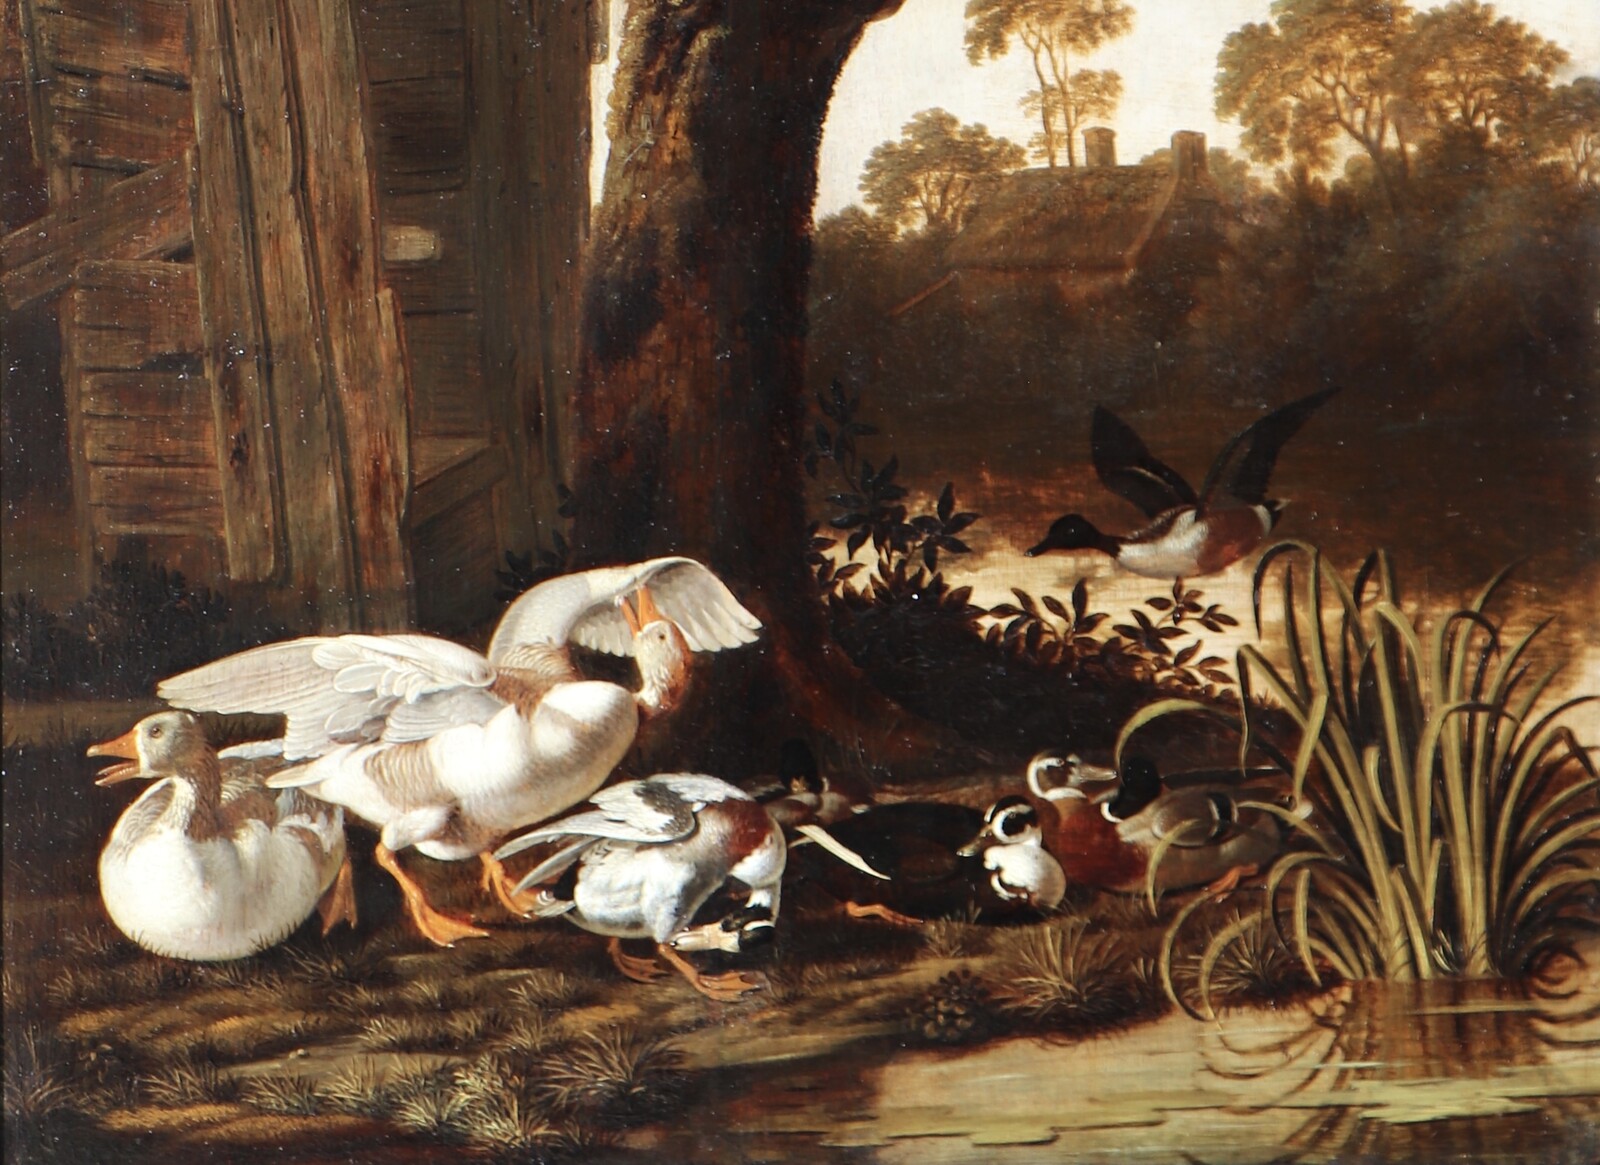 Ducks resting - Wijntrack, Dirck, dec. 2022 - Still lifes and animal ...